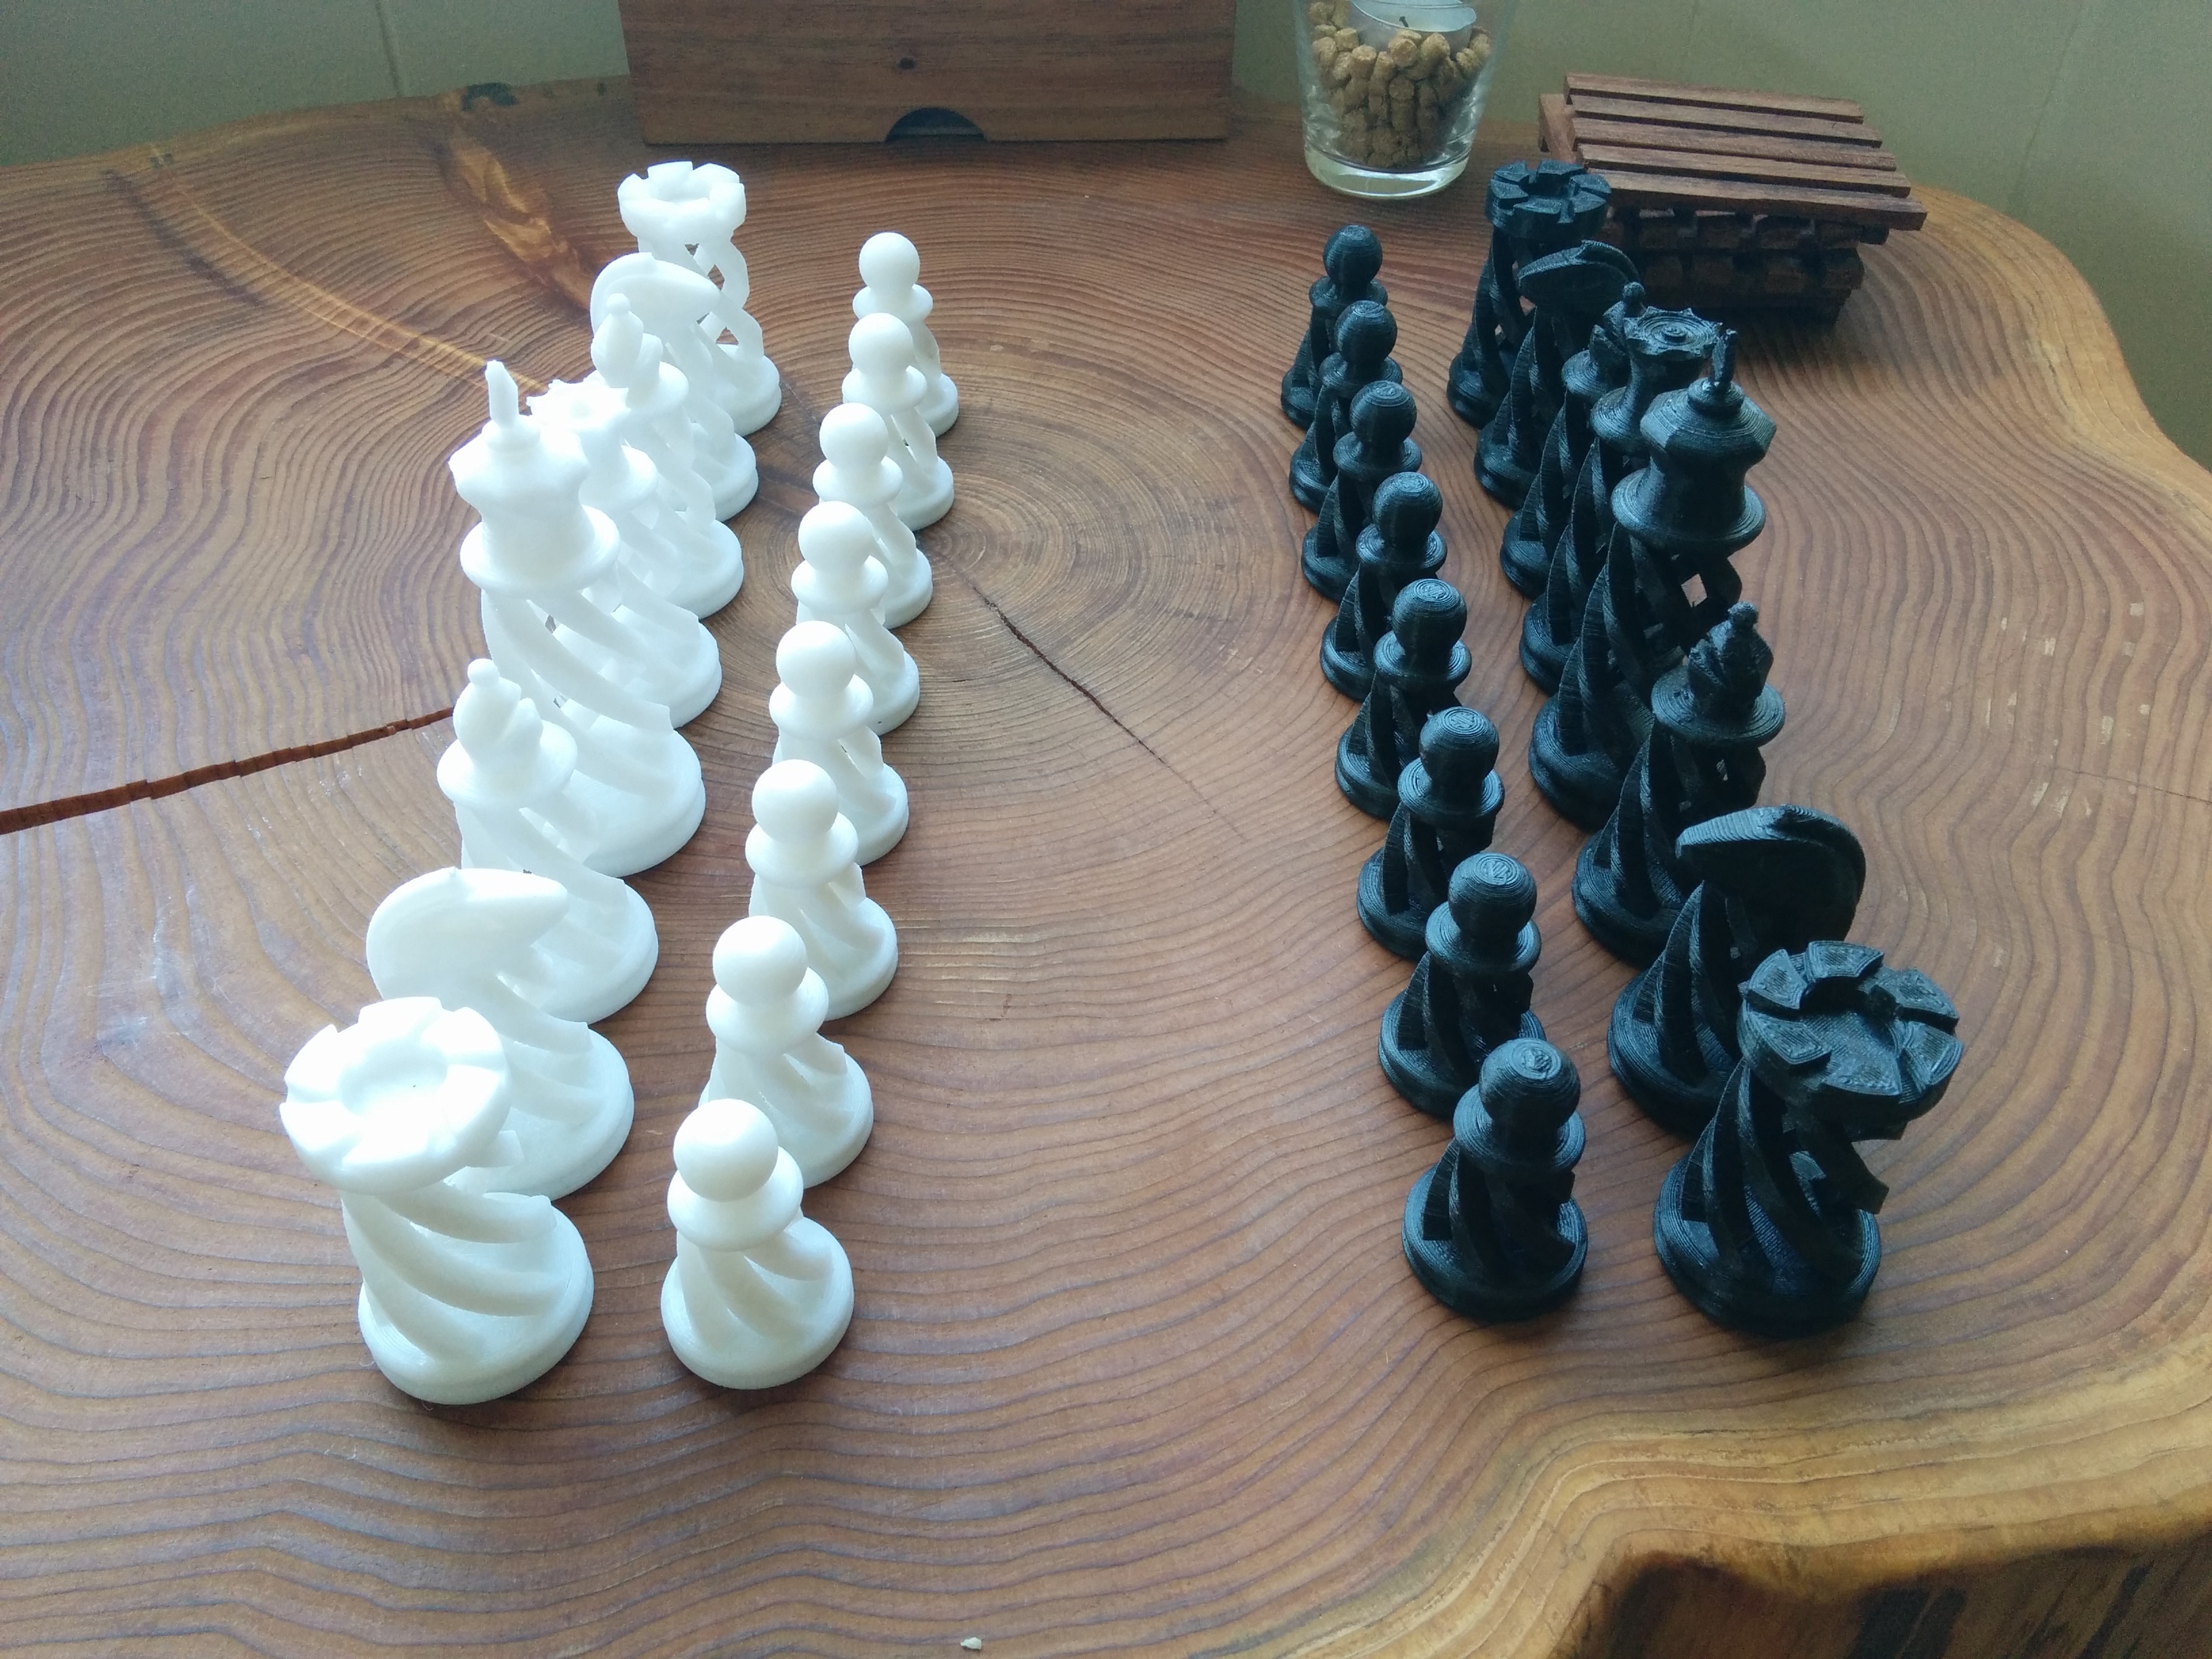 3D Printed Spiral Chess set. 